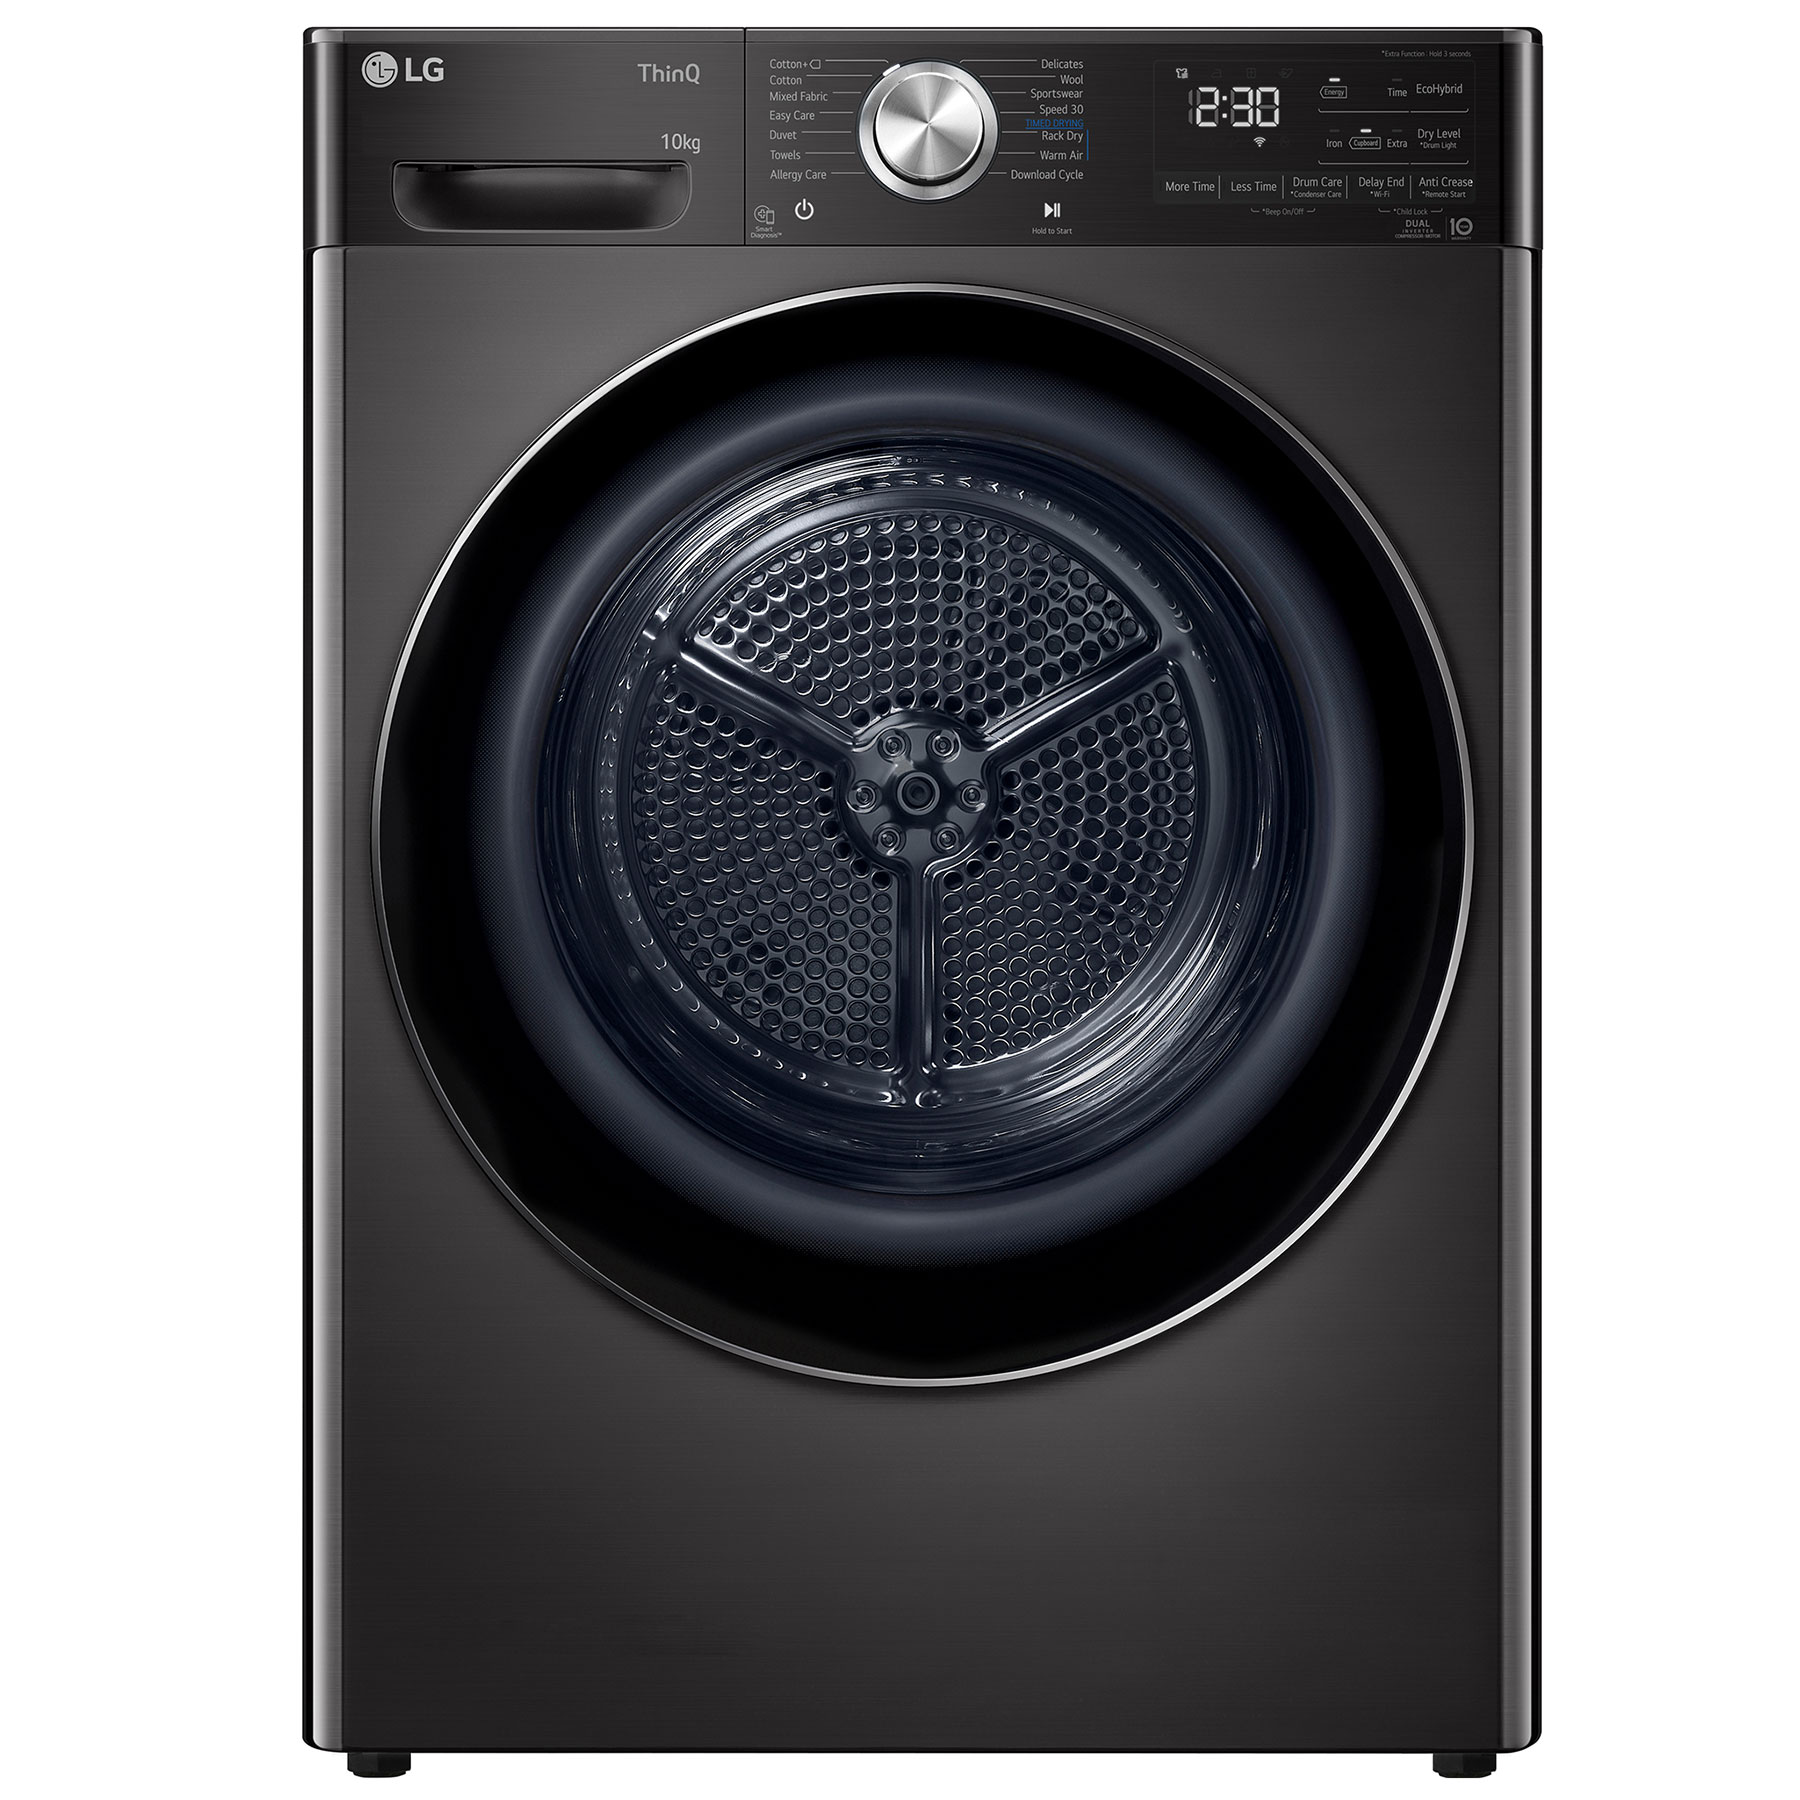 Photos - Tumble Dryer LG FDV1110B 10kg Dual Heat Pump Condenser Dryer in Black Steel A 